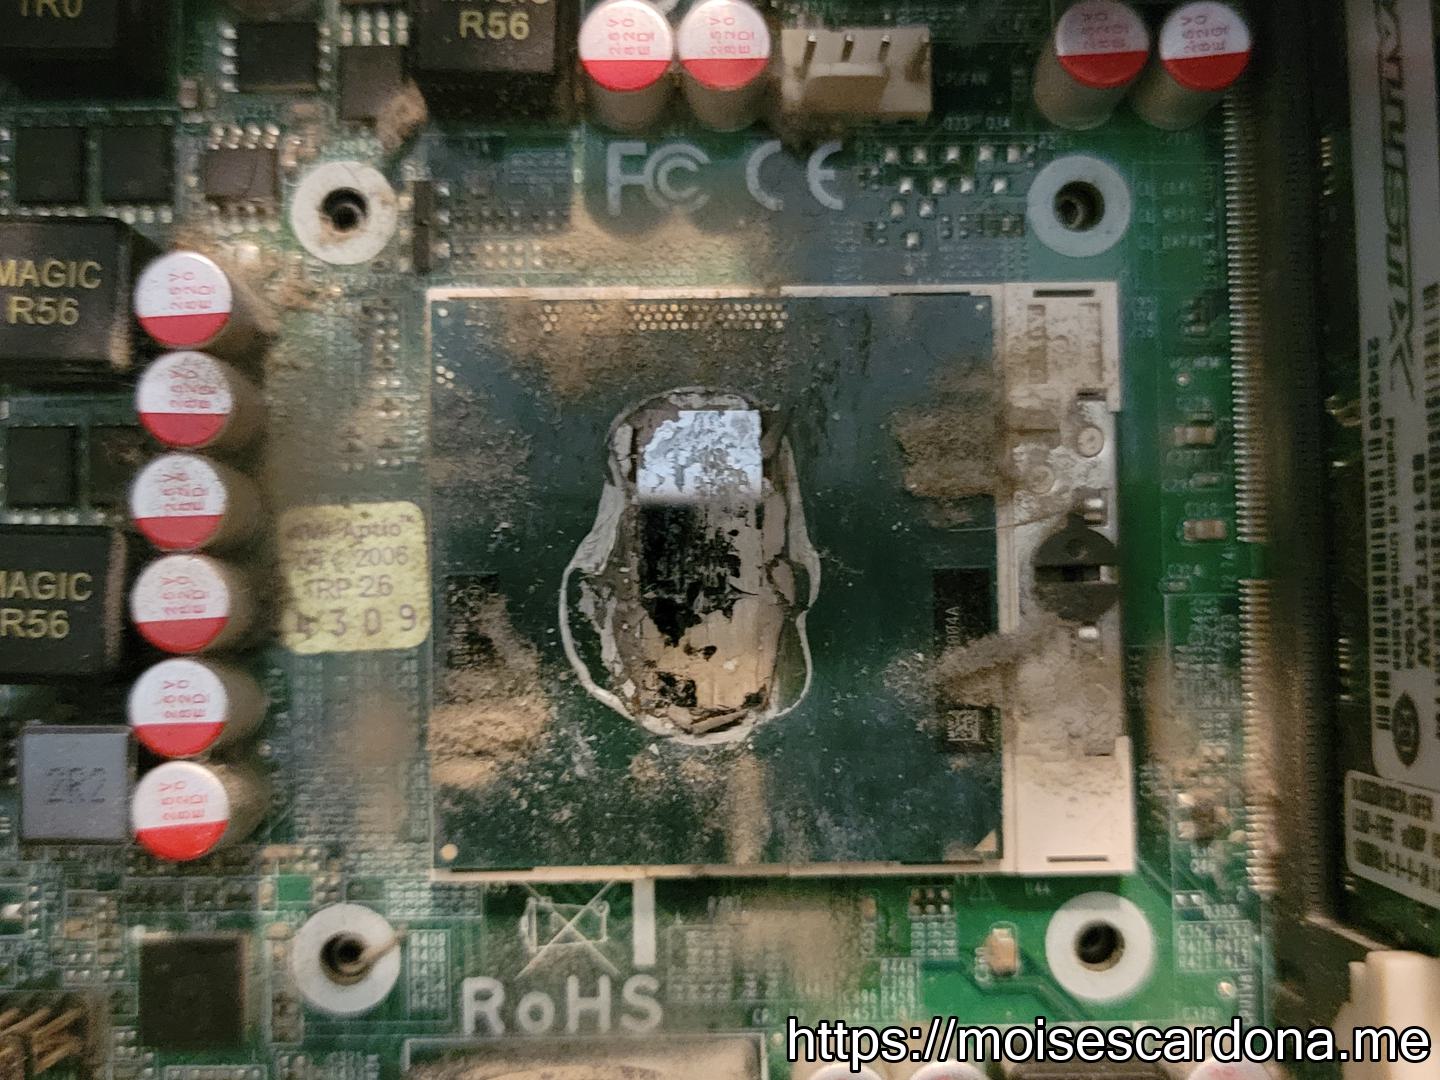 05 - Intel i7-3610QM CPU in socket